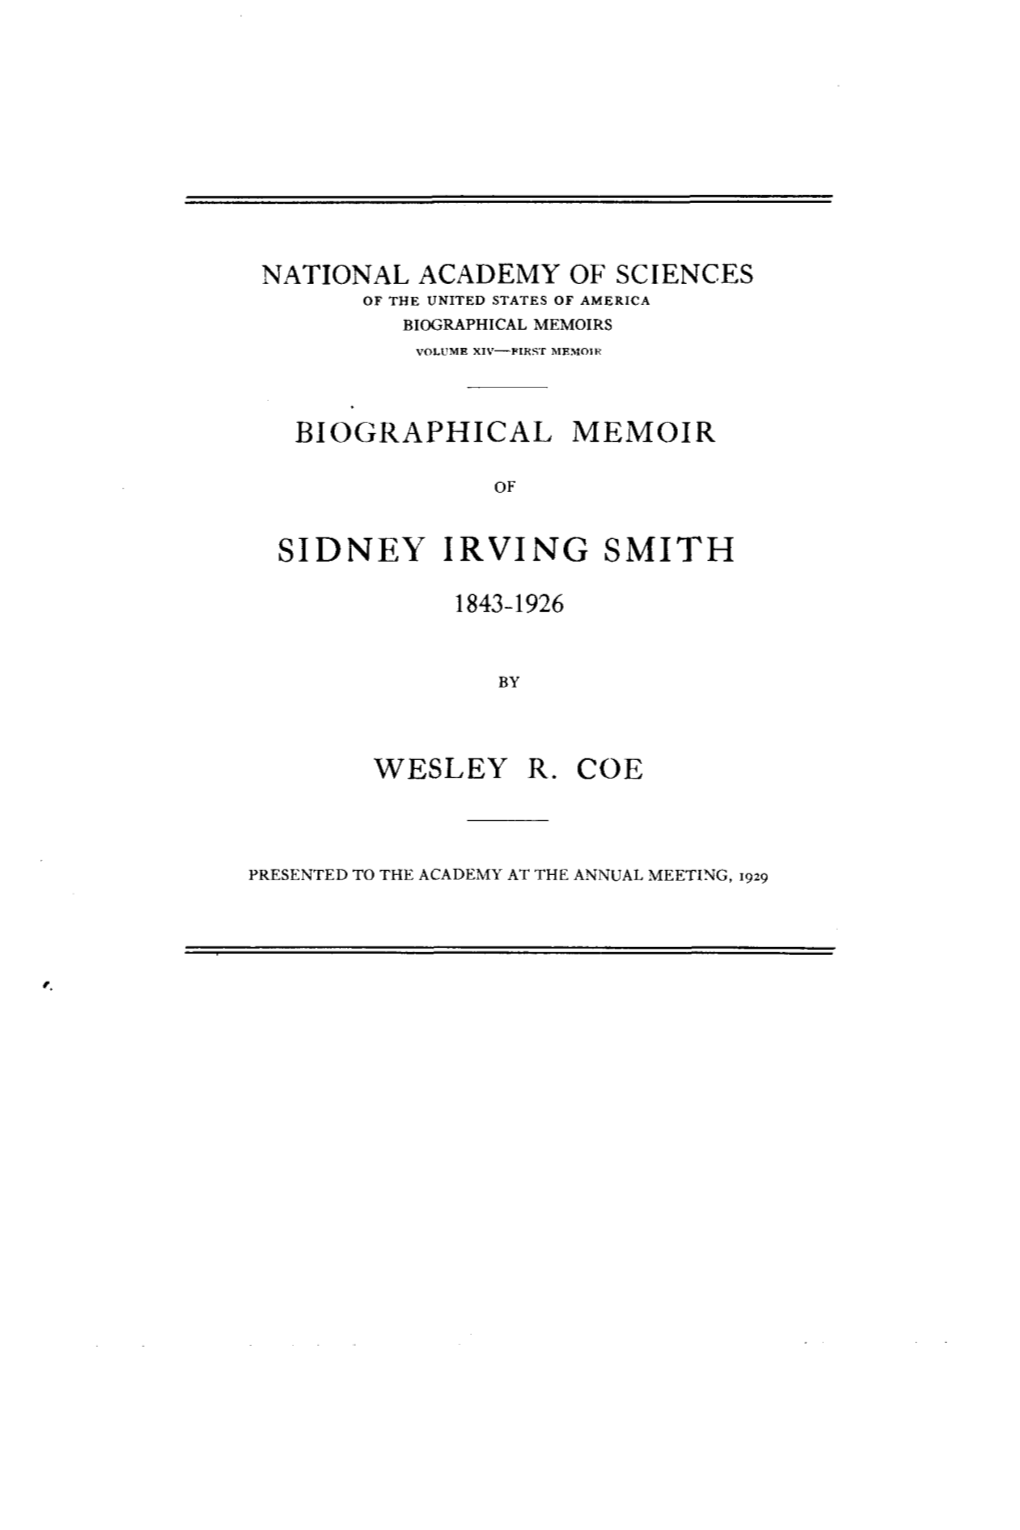 Sidney Irving Smith 1843-1926